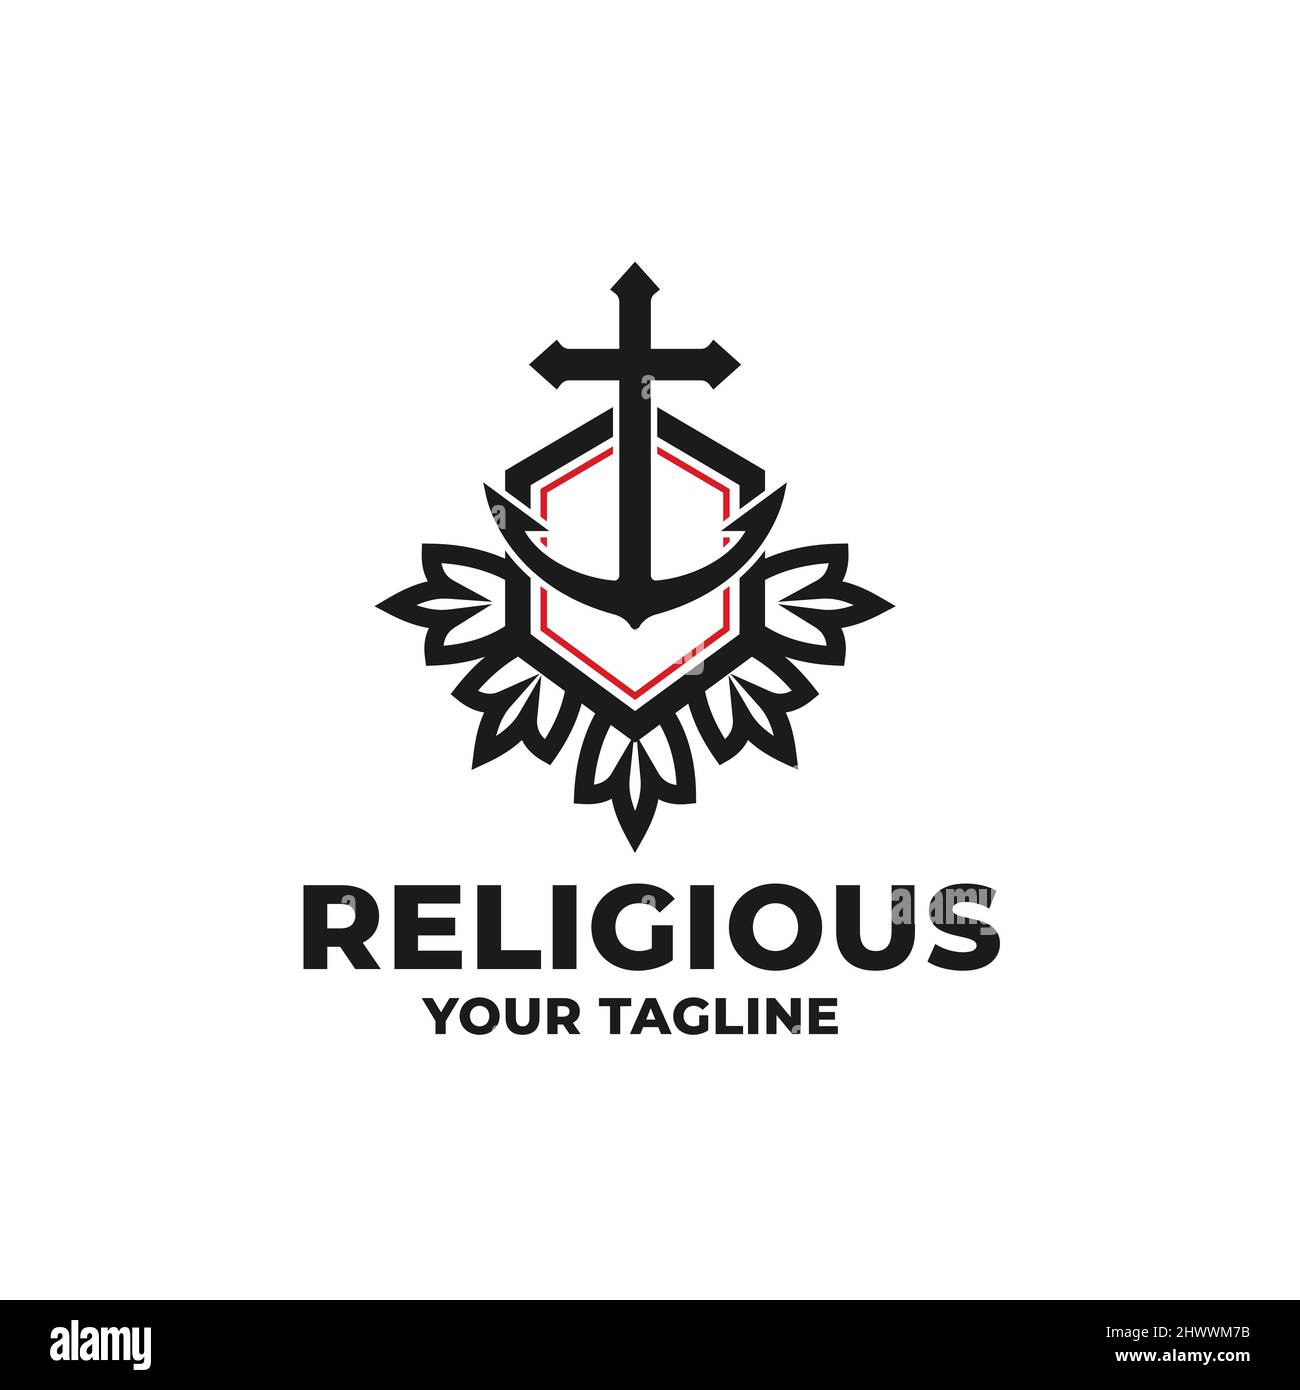 Anchor and shield logo, church symbol, cross, flower, template, religious design illustration Stock Vector